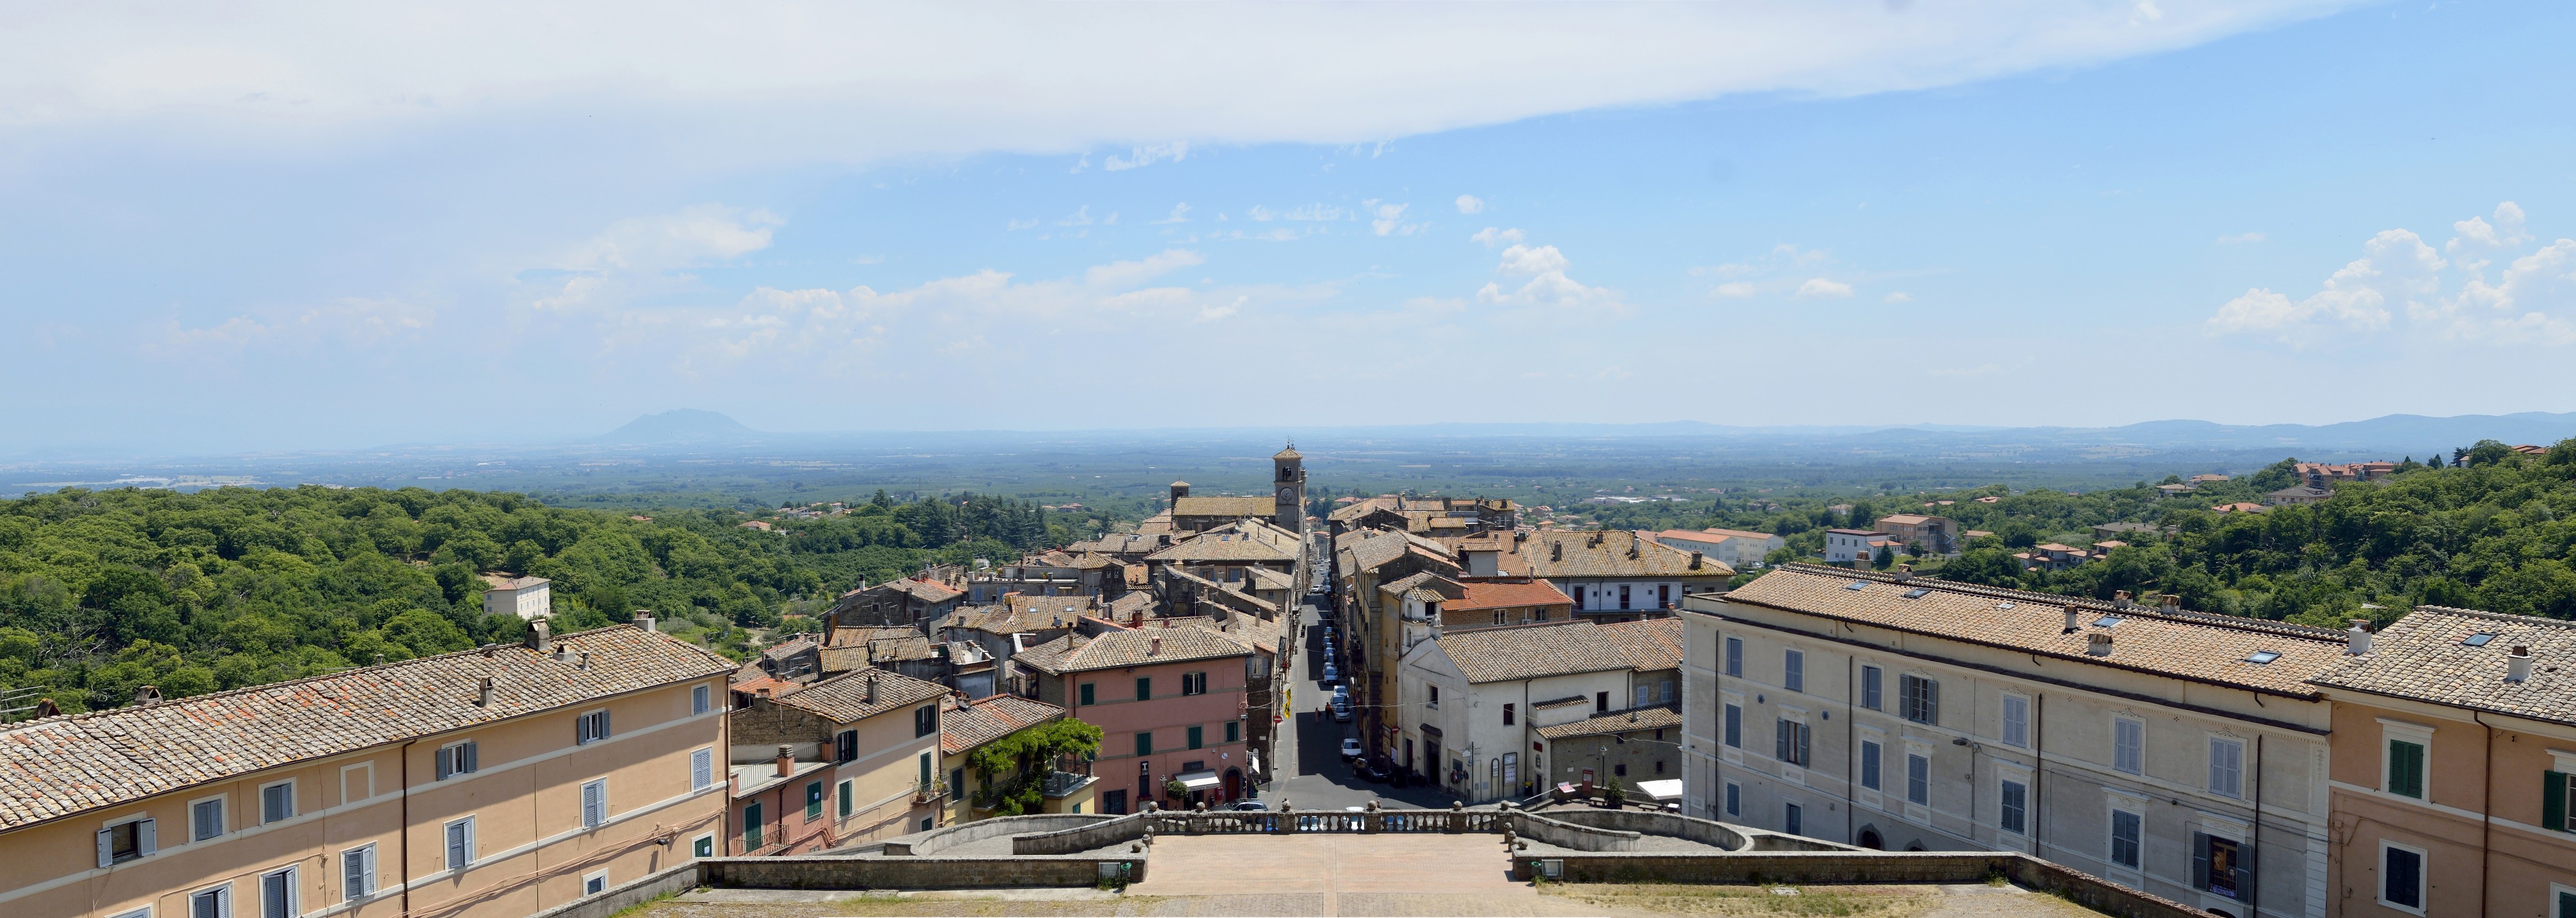 Panoramica of Caprarola seen from Palazzo Farnese